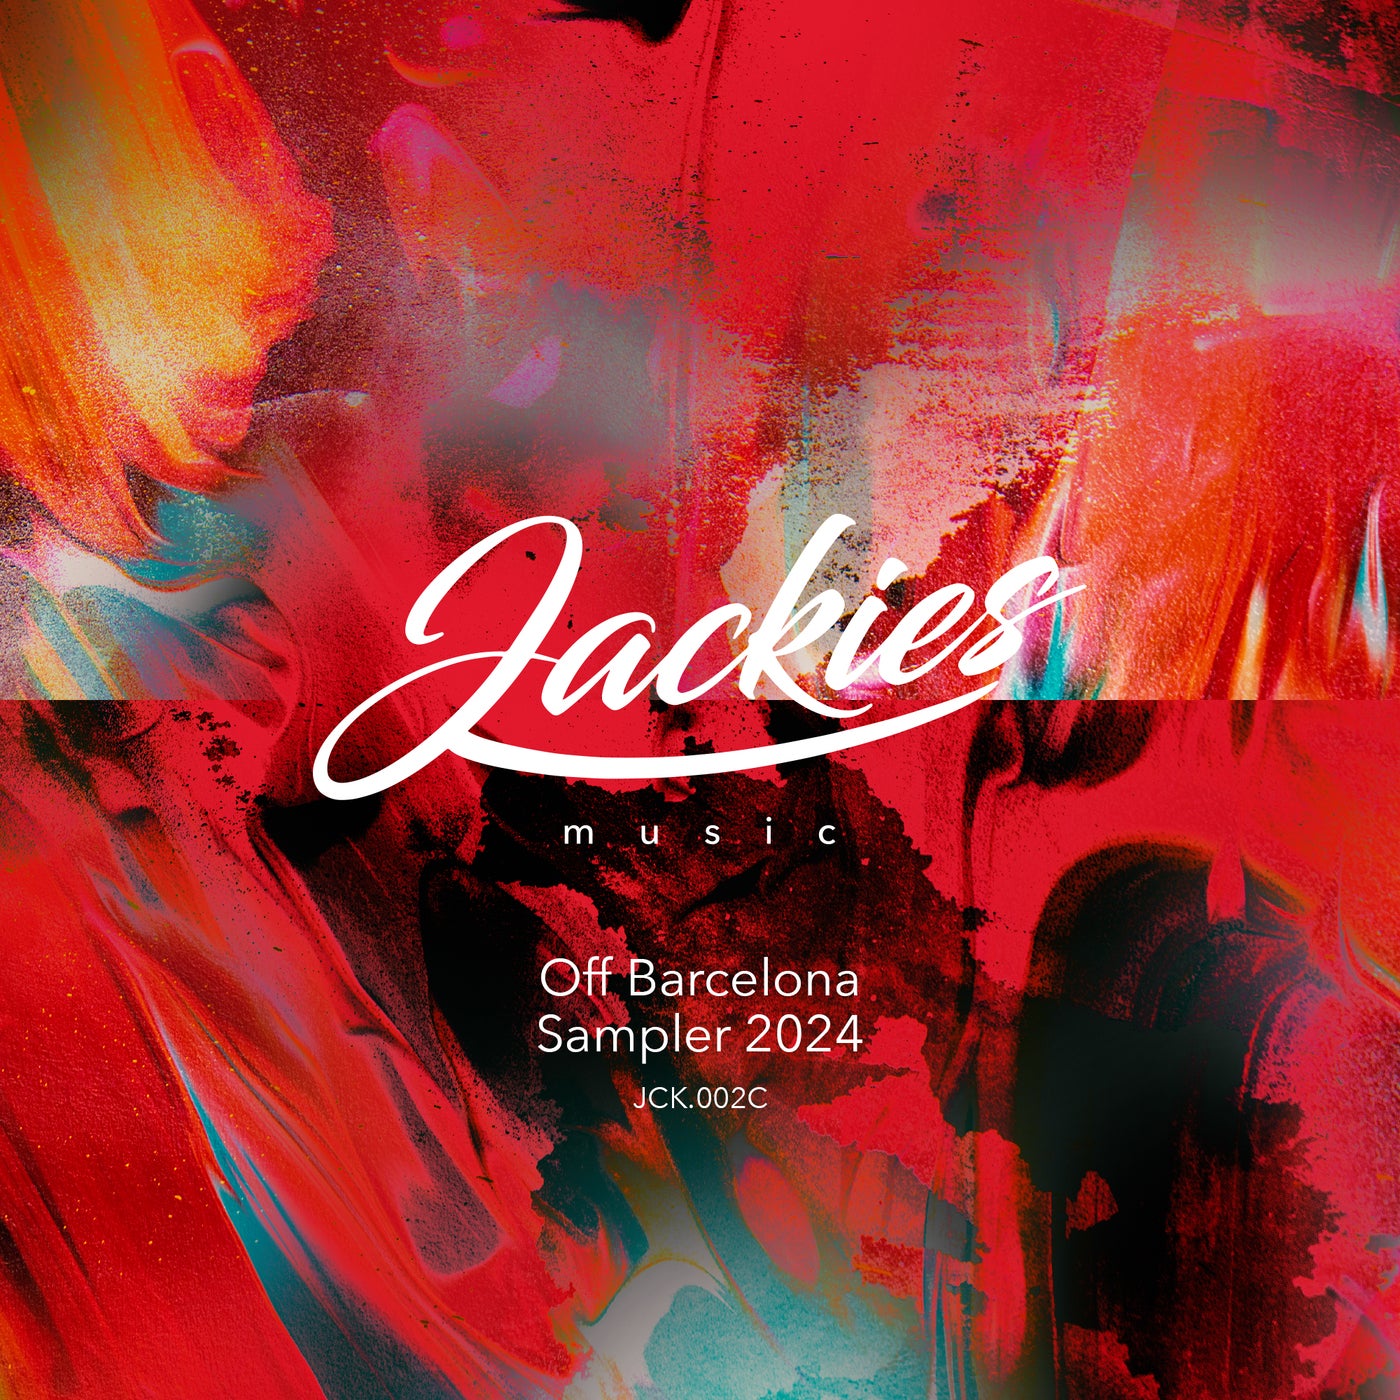 VA - Off Barcelona 2024 Sampler on Jackies Music Records